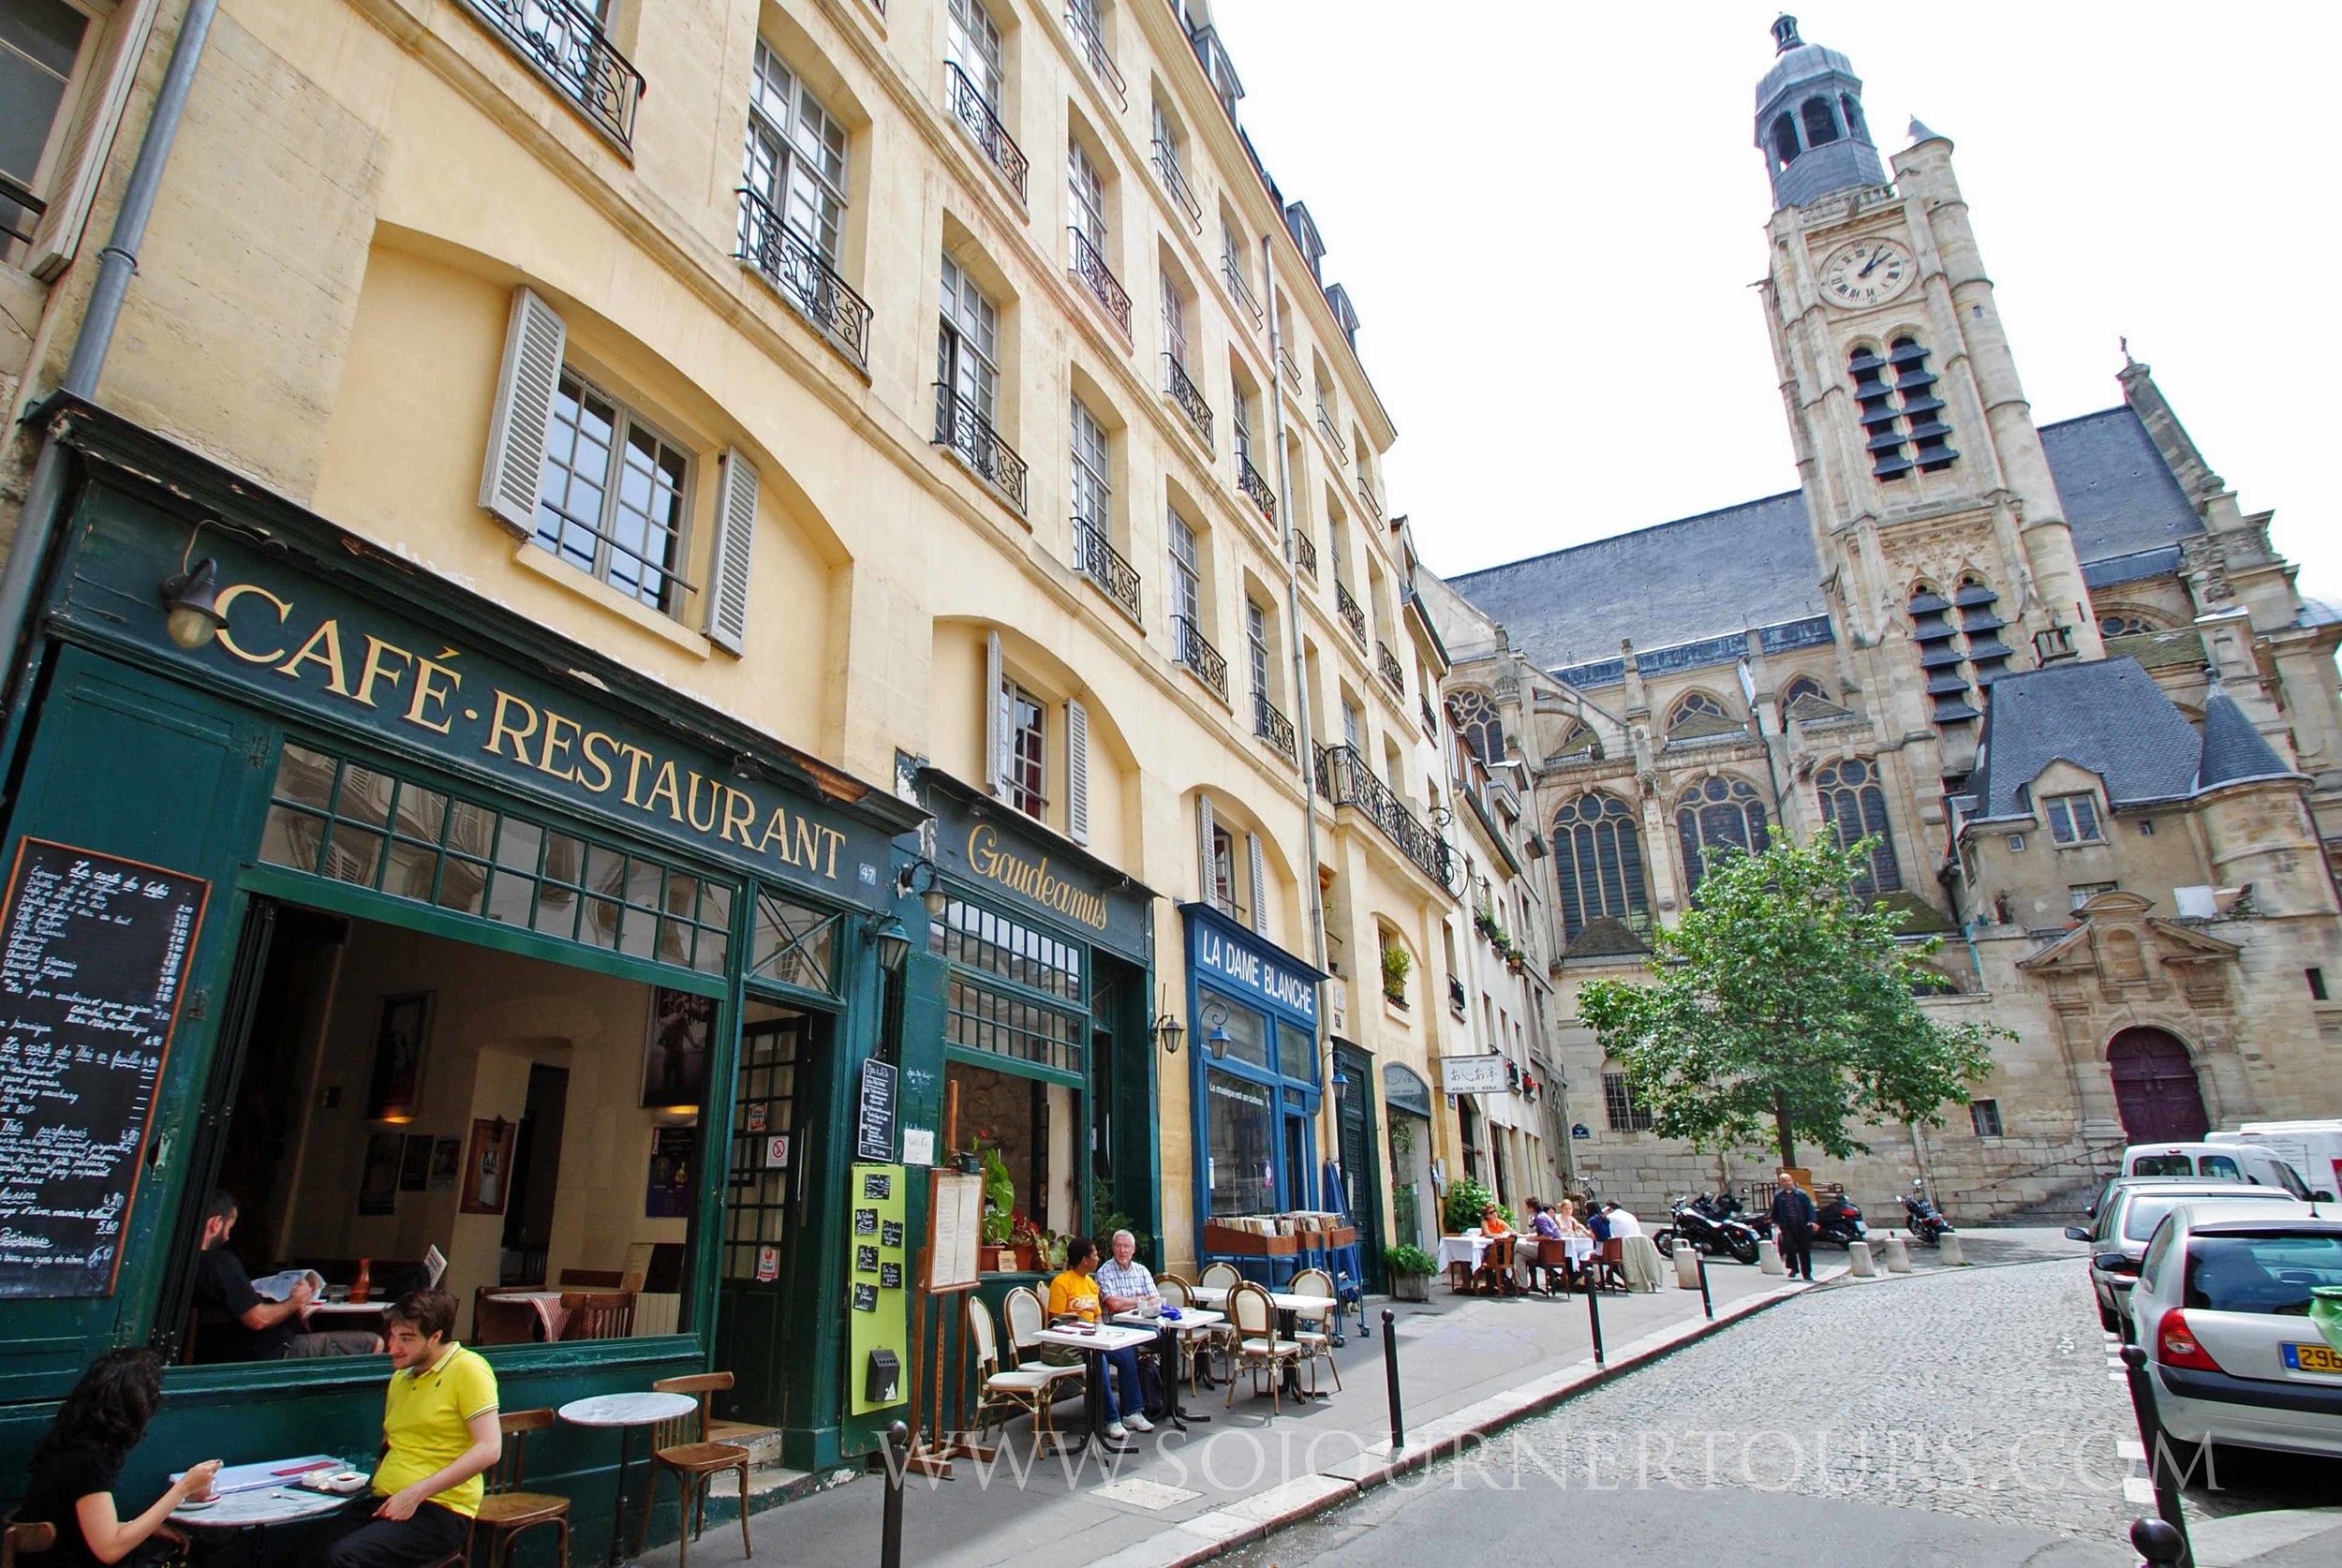 The Latin Quarter: Paris, France (Sojourner Tours)